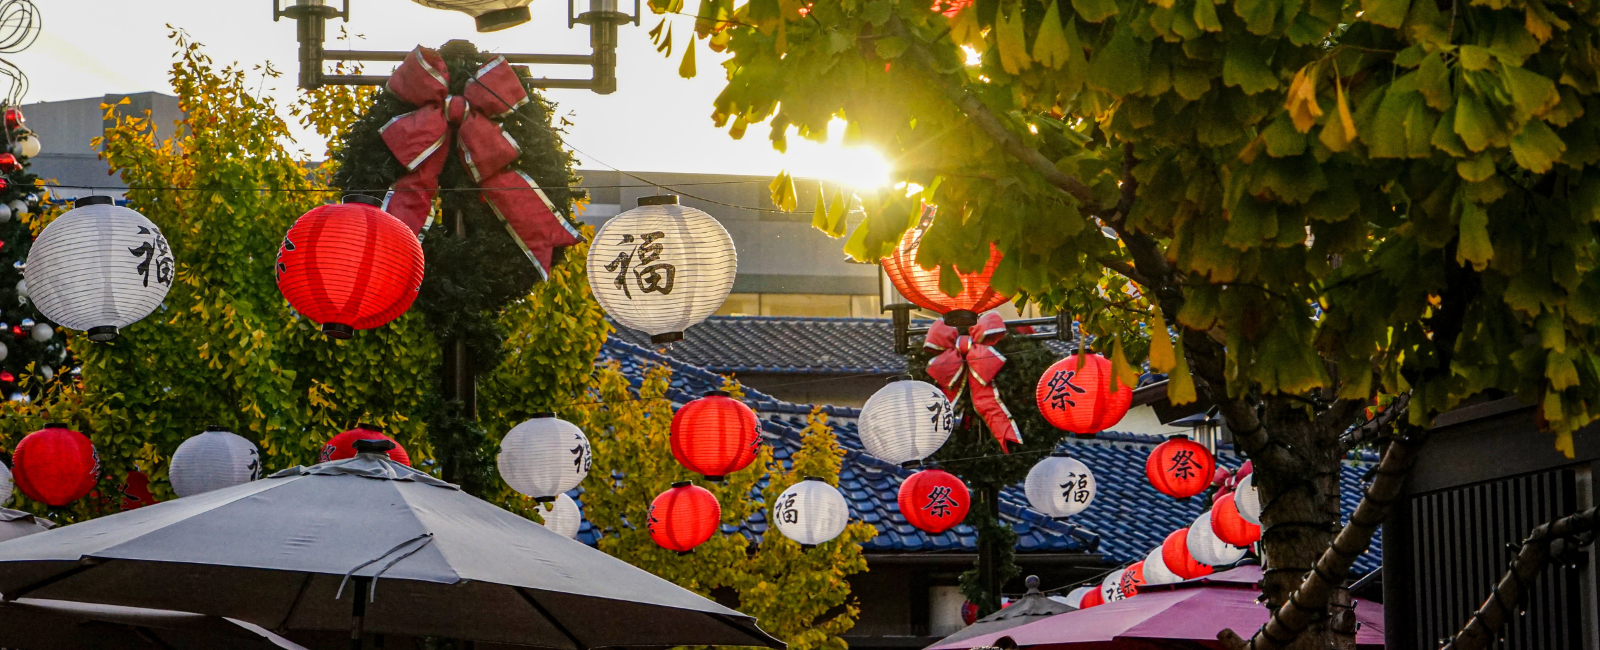 Little Tokyo LA with Japanese lanterns